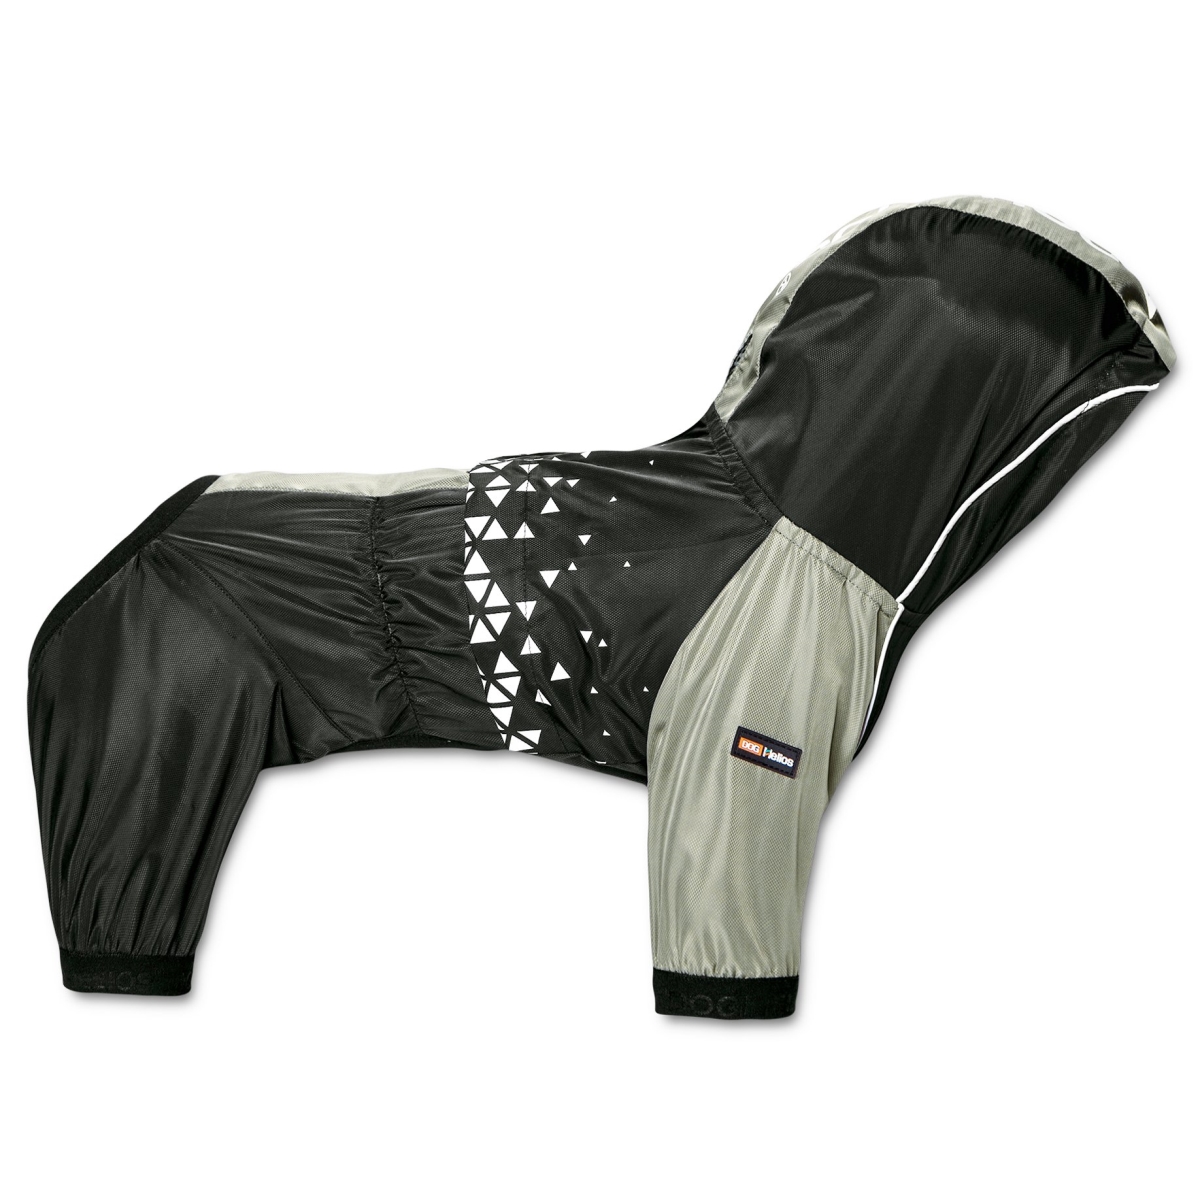 Good Boy Organics Vortex Full Bodied Waterproof Windbreaker Dog Jacket - Black - Large